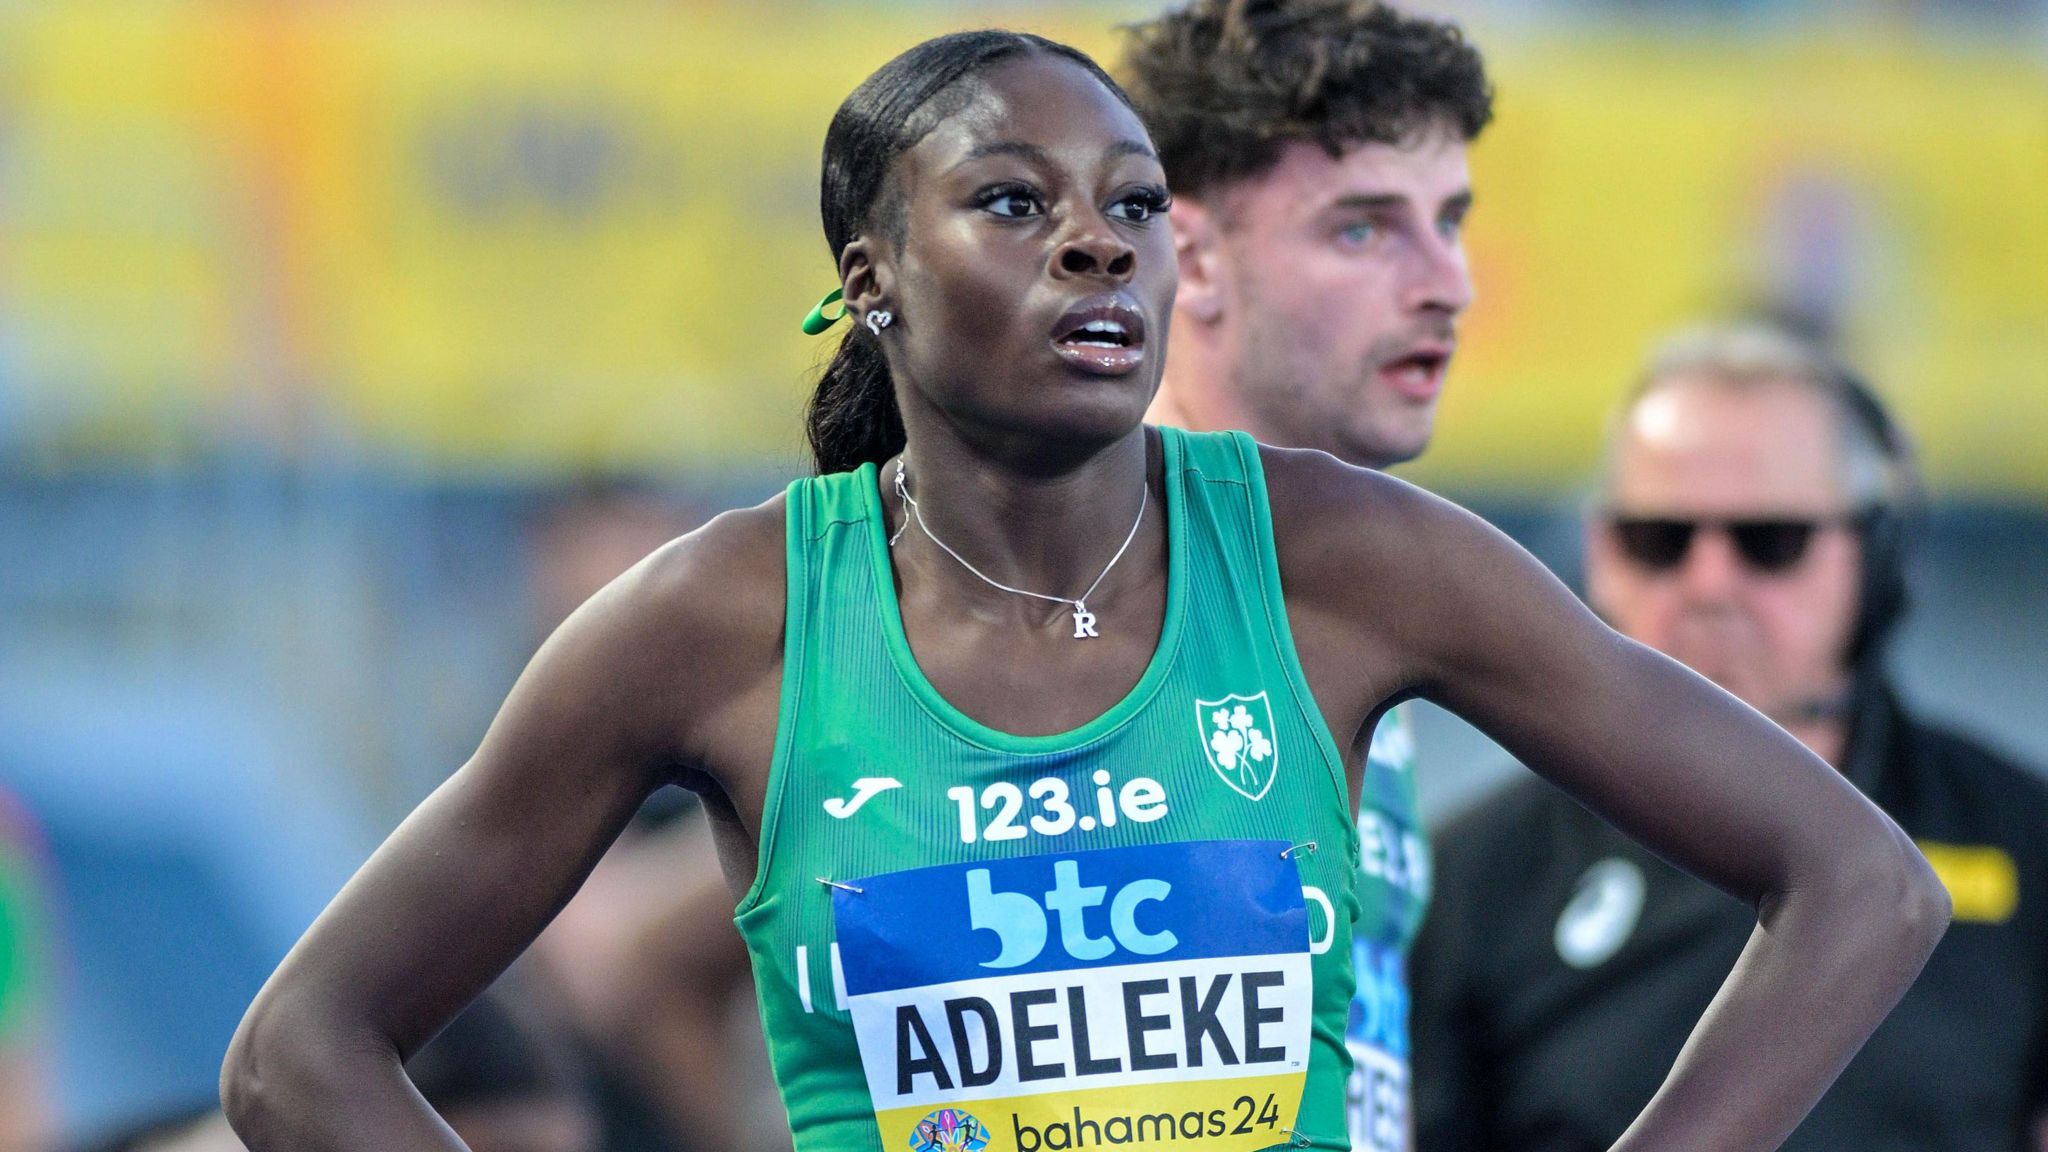 Rhasidat Adeleke ran 48.45 in the final of the Mixed 4x400m relay